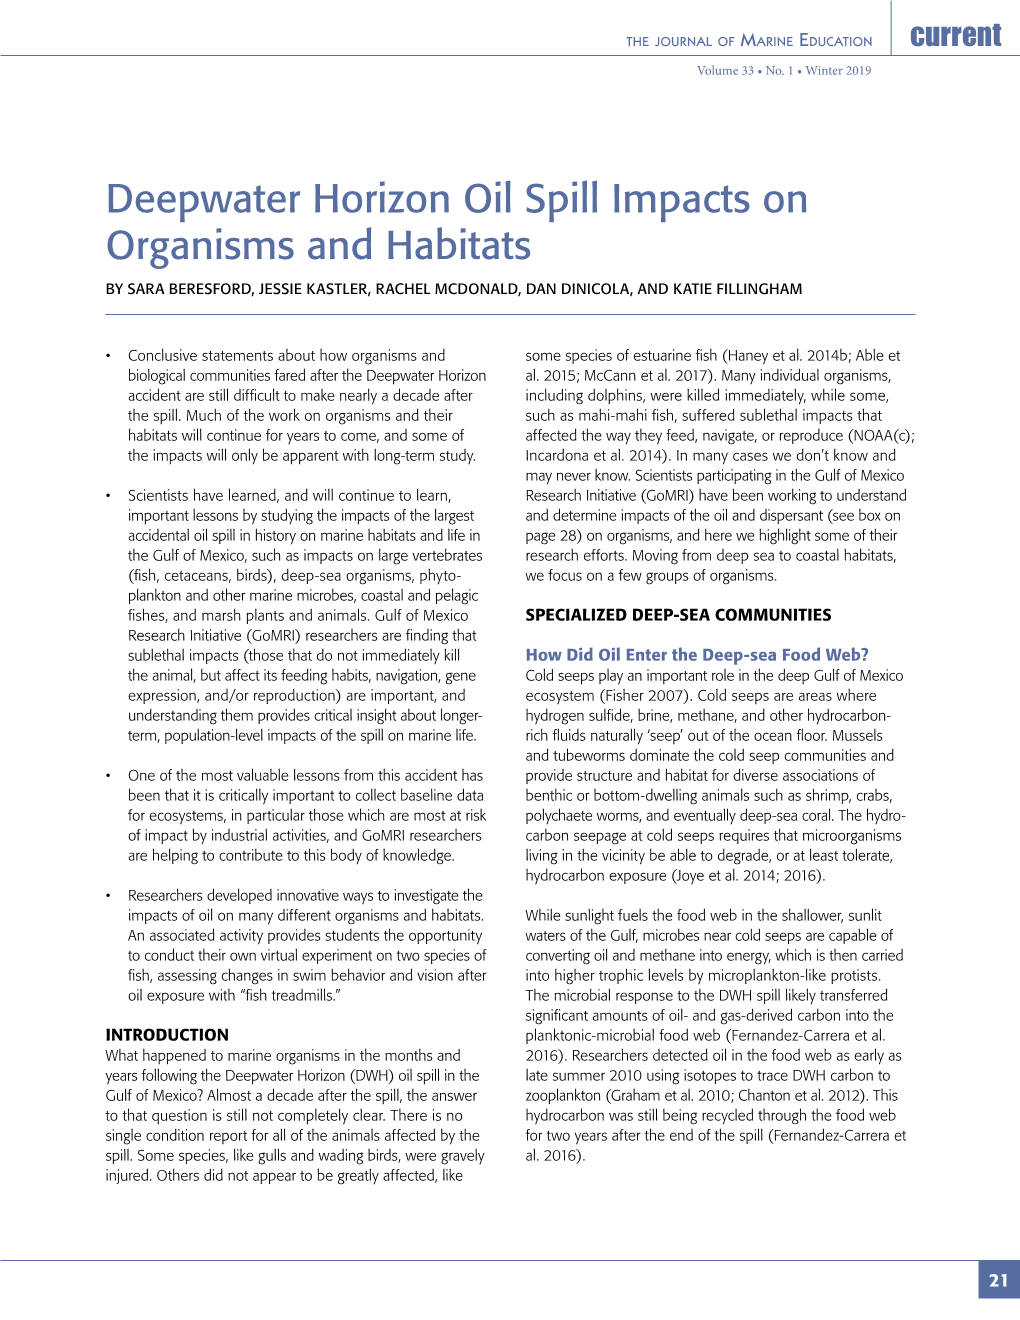 Deepwater Horizon Oil Spill Impacts on Organisms and Habitats by SARA BERESFORD, JESSIE KASTLER, RACHEL MCDONALD, DAN DINICOLA, and KATIE FILLINGHAM